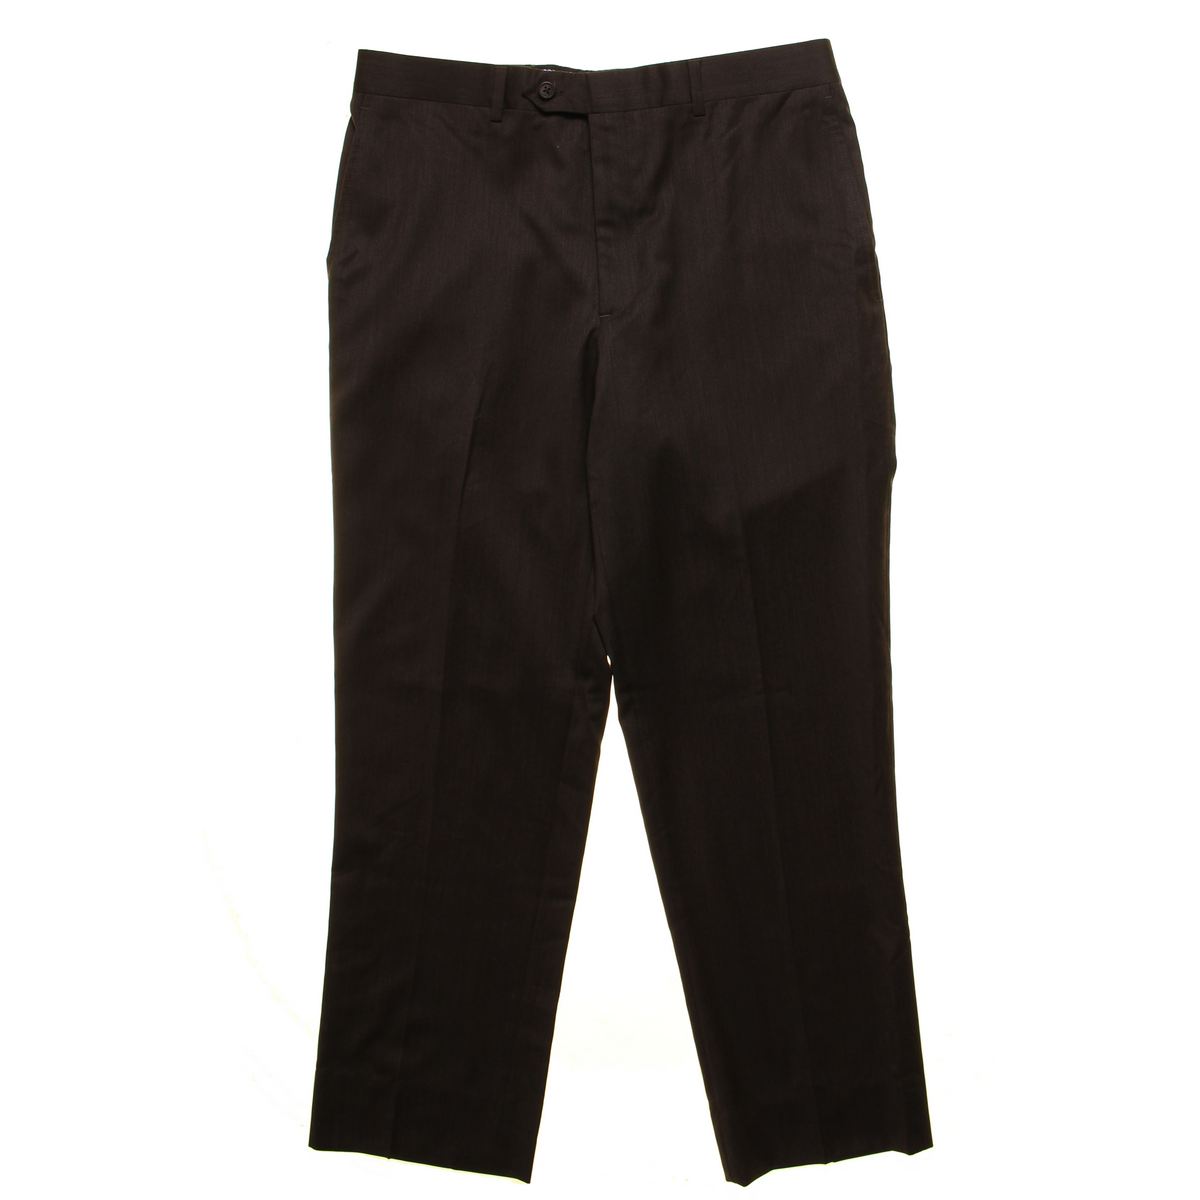 KIRKLAND SIGNATURE NEW Men's Wool Flat Front Dress Pants TEDO | eBay